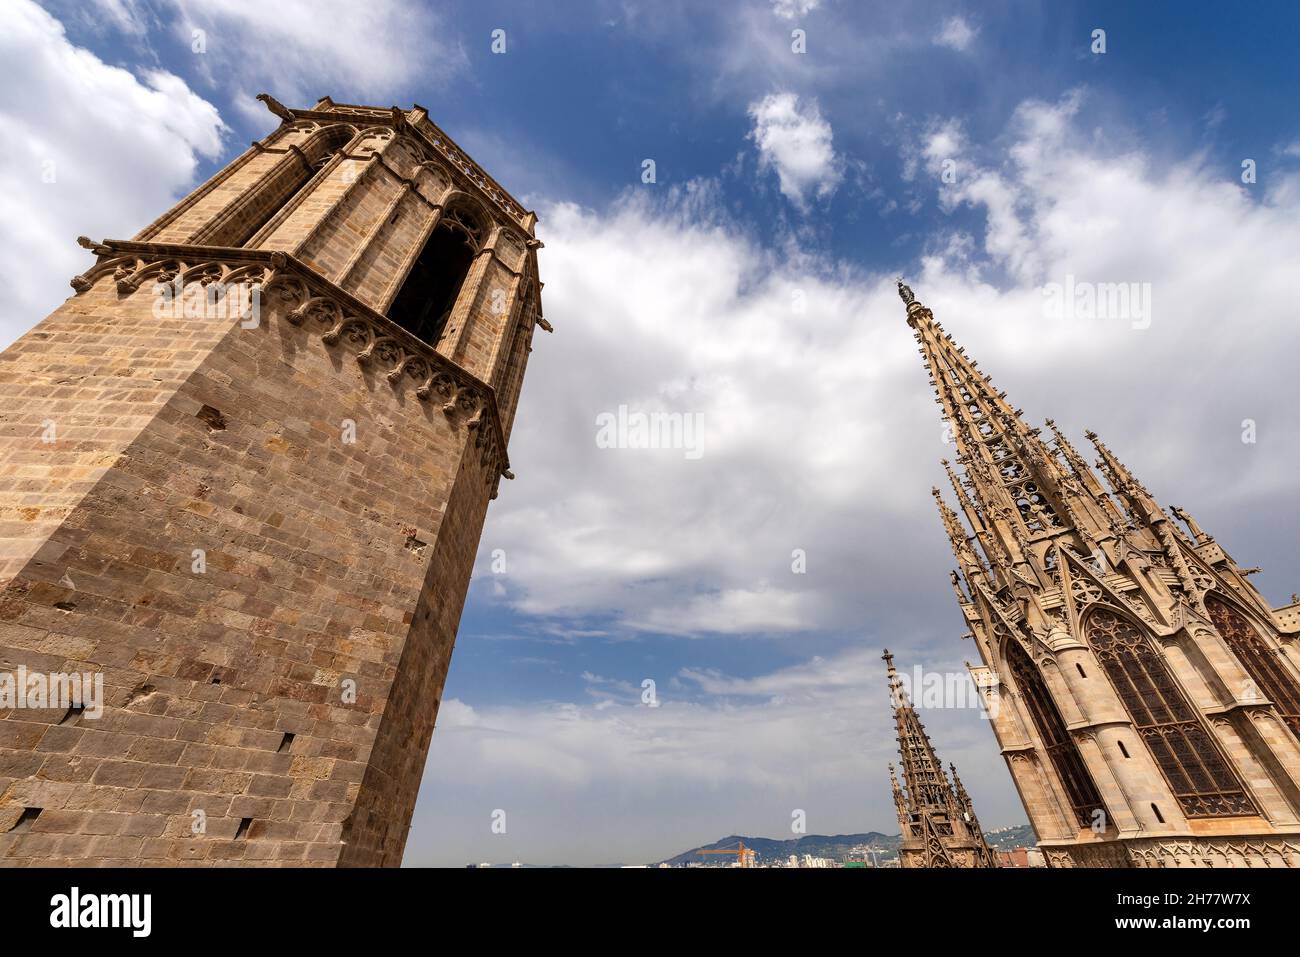 Barcelona, Gothic Cathedral of the Holy Cross and Saint Eulalia (Catedral de la Santa Cruz y Santa Eulalia) Catalonia, Spain - 13th, 15th centuries Stock Photo